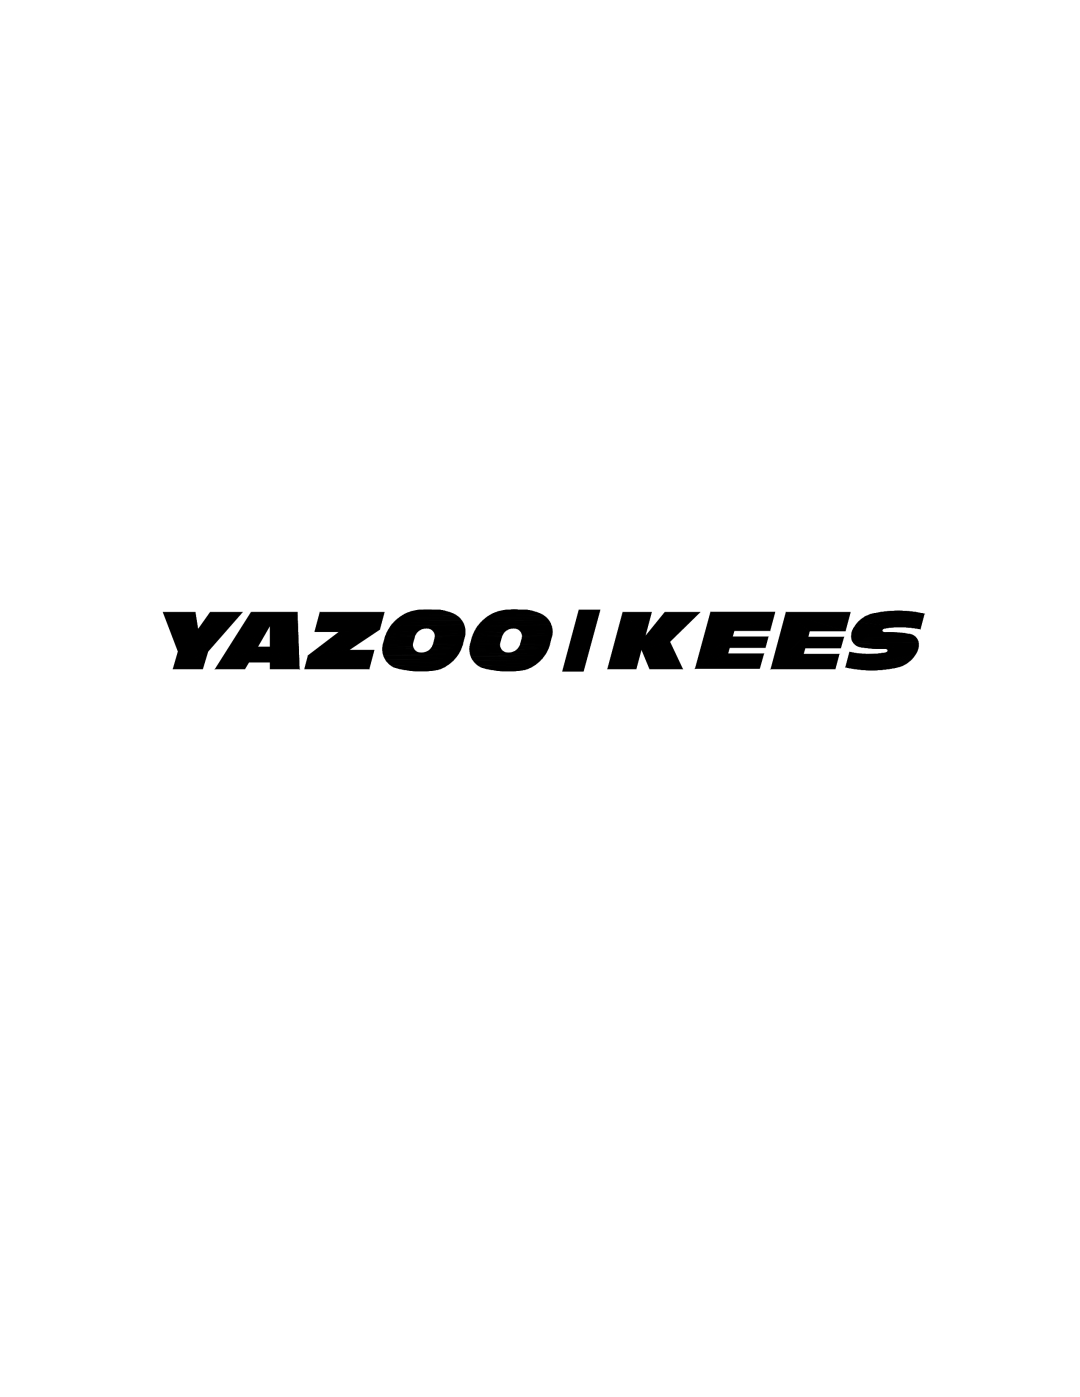 Yazoo/Kees KKW32132, KKW36132, KKH36132, KKW48152, KKH32132, KKH36152, KKH48152 manual 